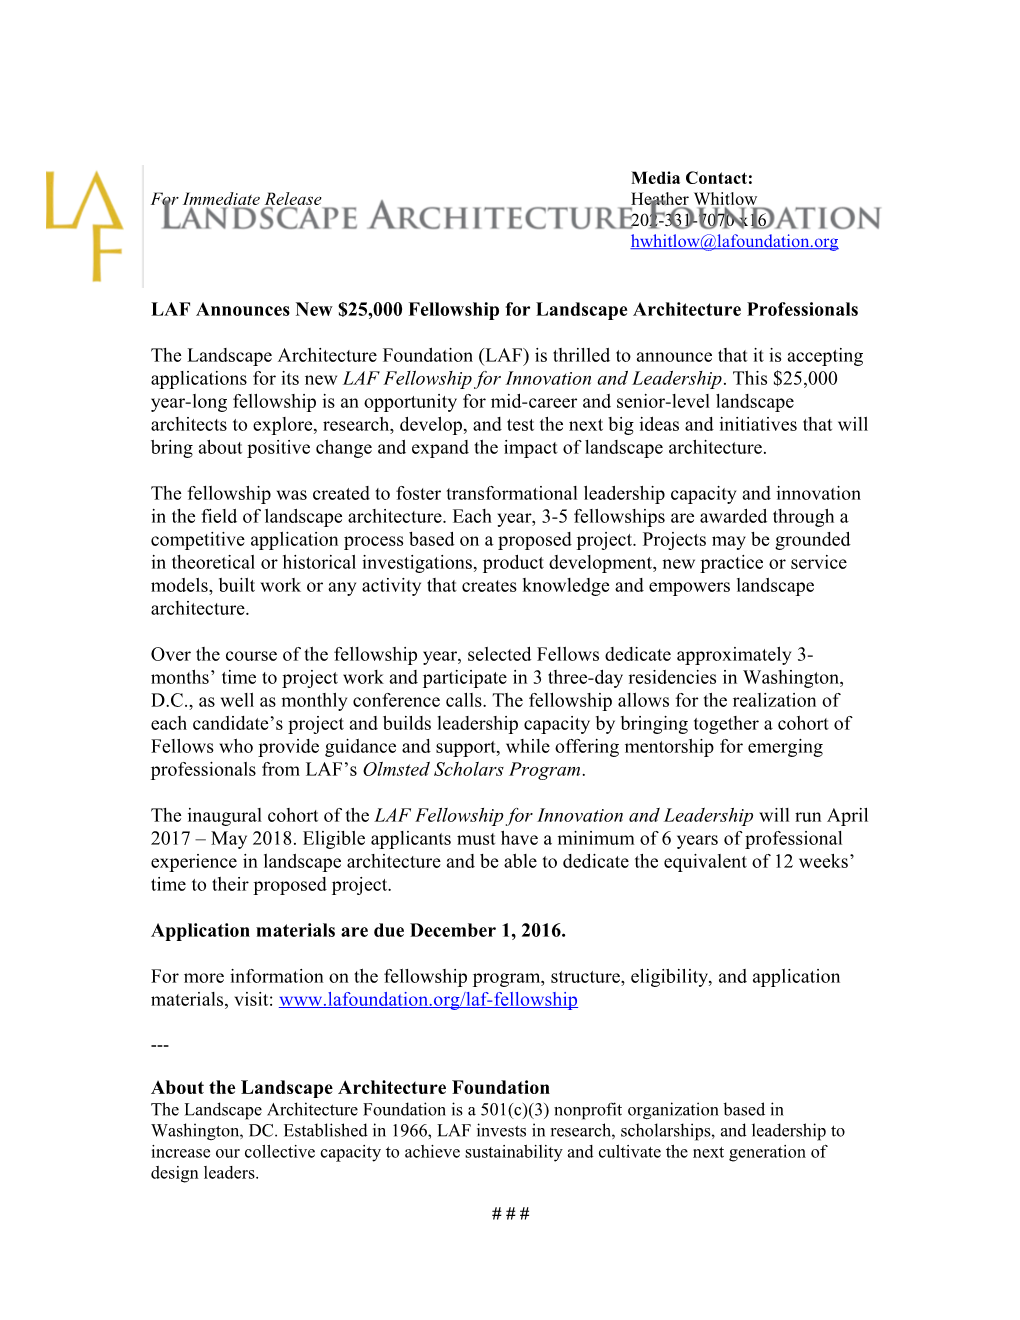 LAF Announces New $25,000 Fellowship for Landscape Architecture Professionals